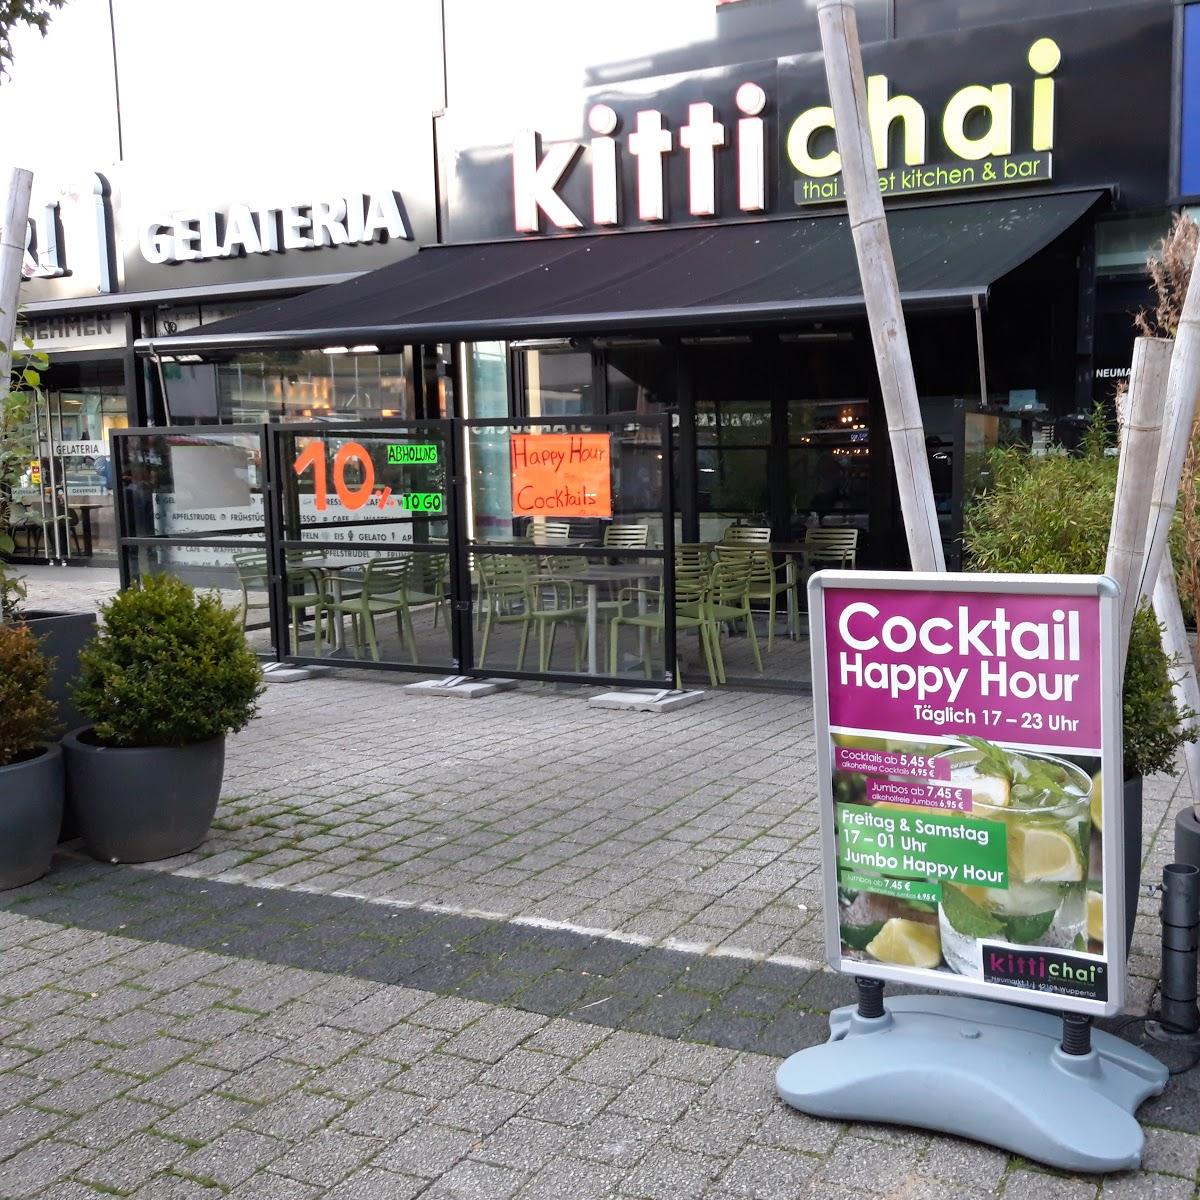 Restaurant "Kitti Chai" in Wuppertal